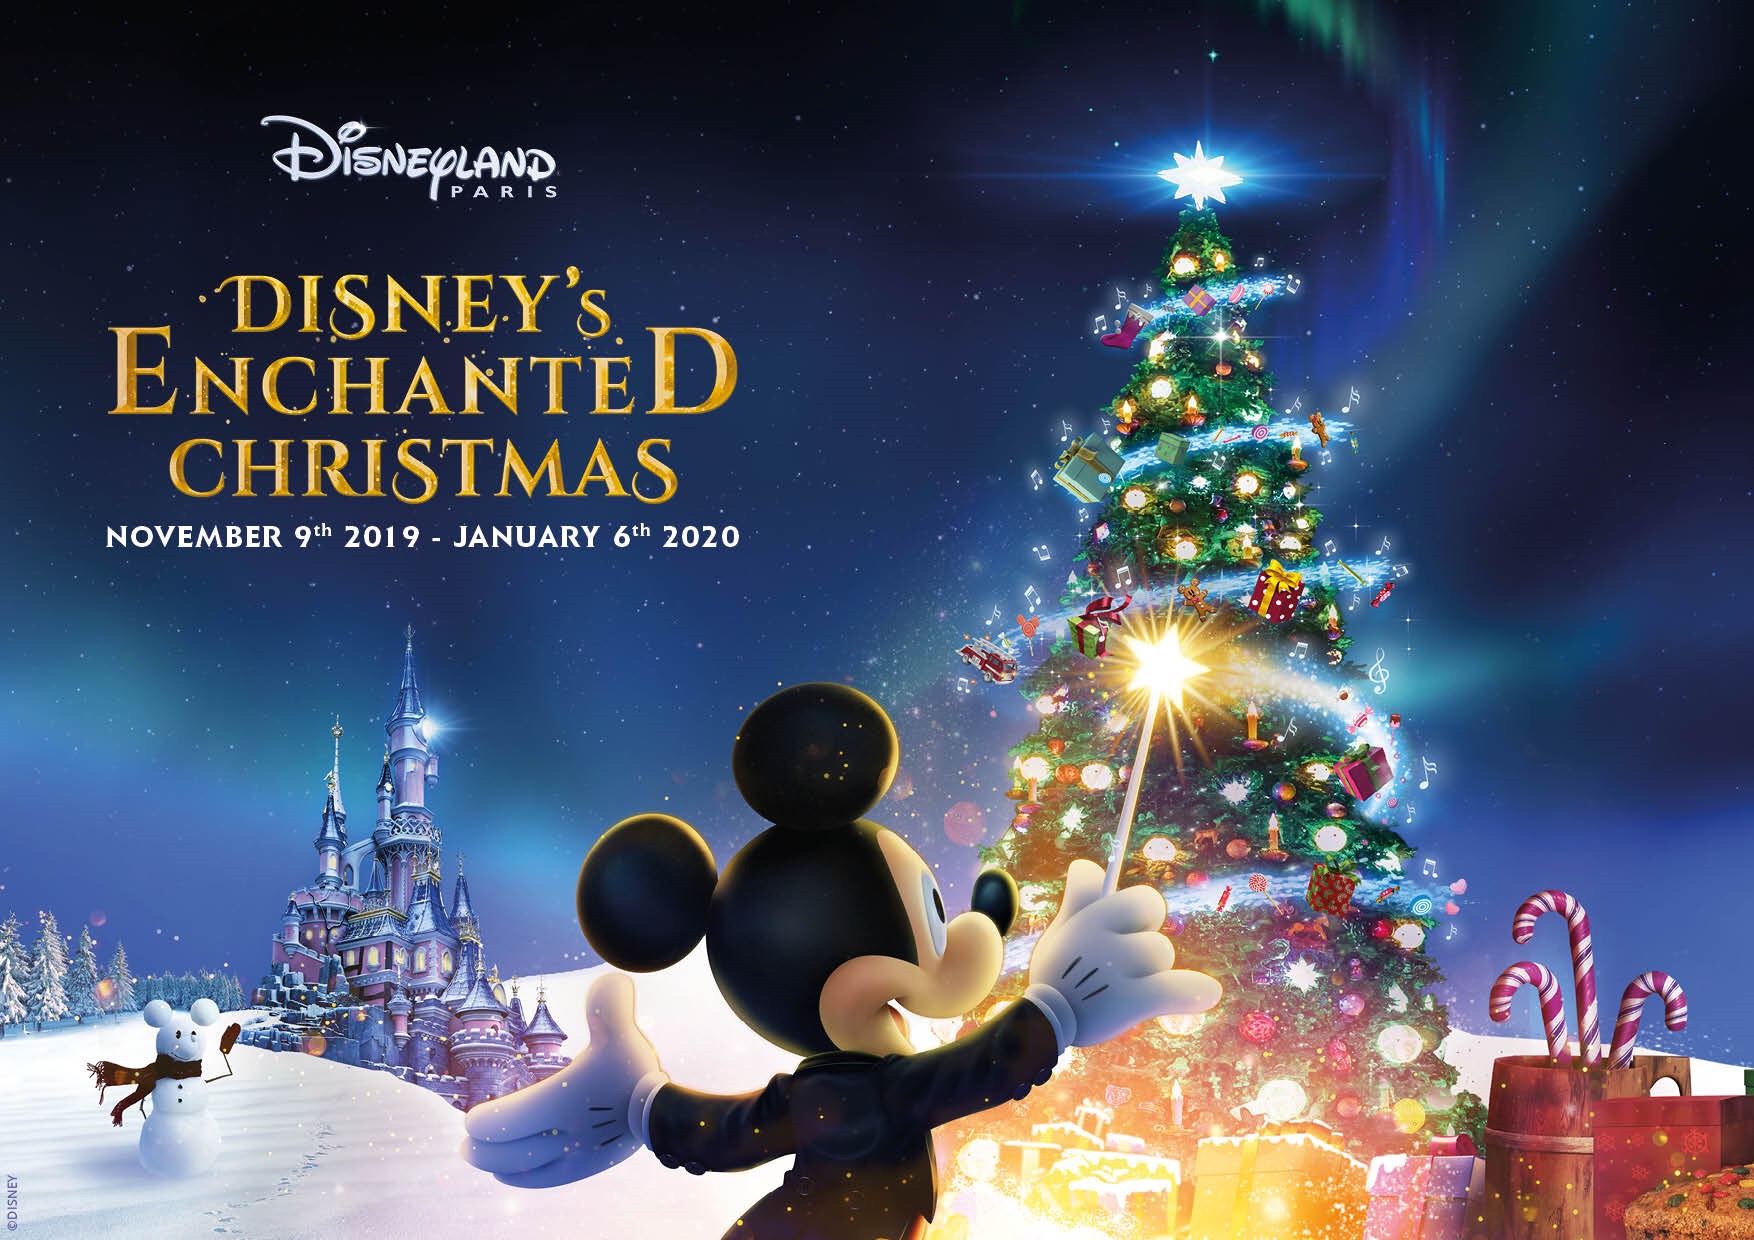 Christmas Returning to Disneyland Paris with Disney’s Enchanted Christmas!